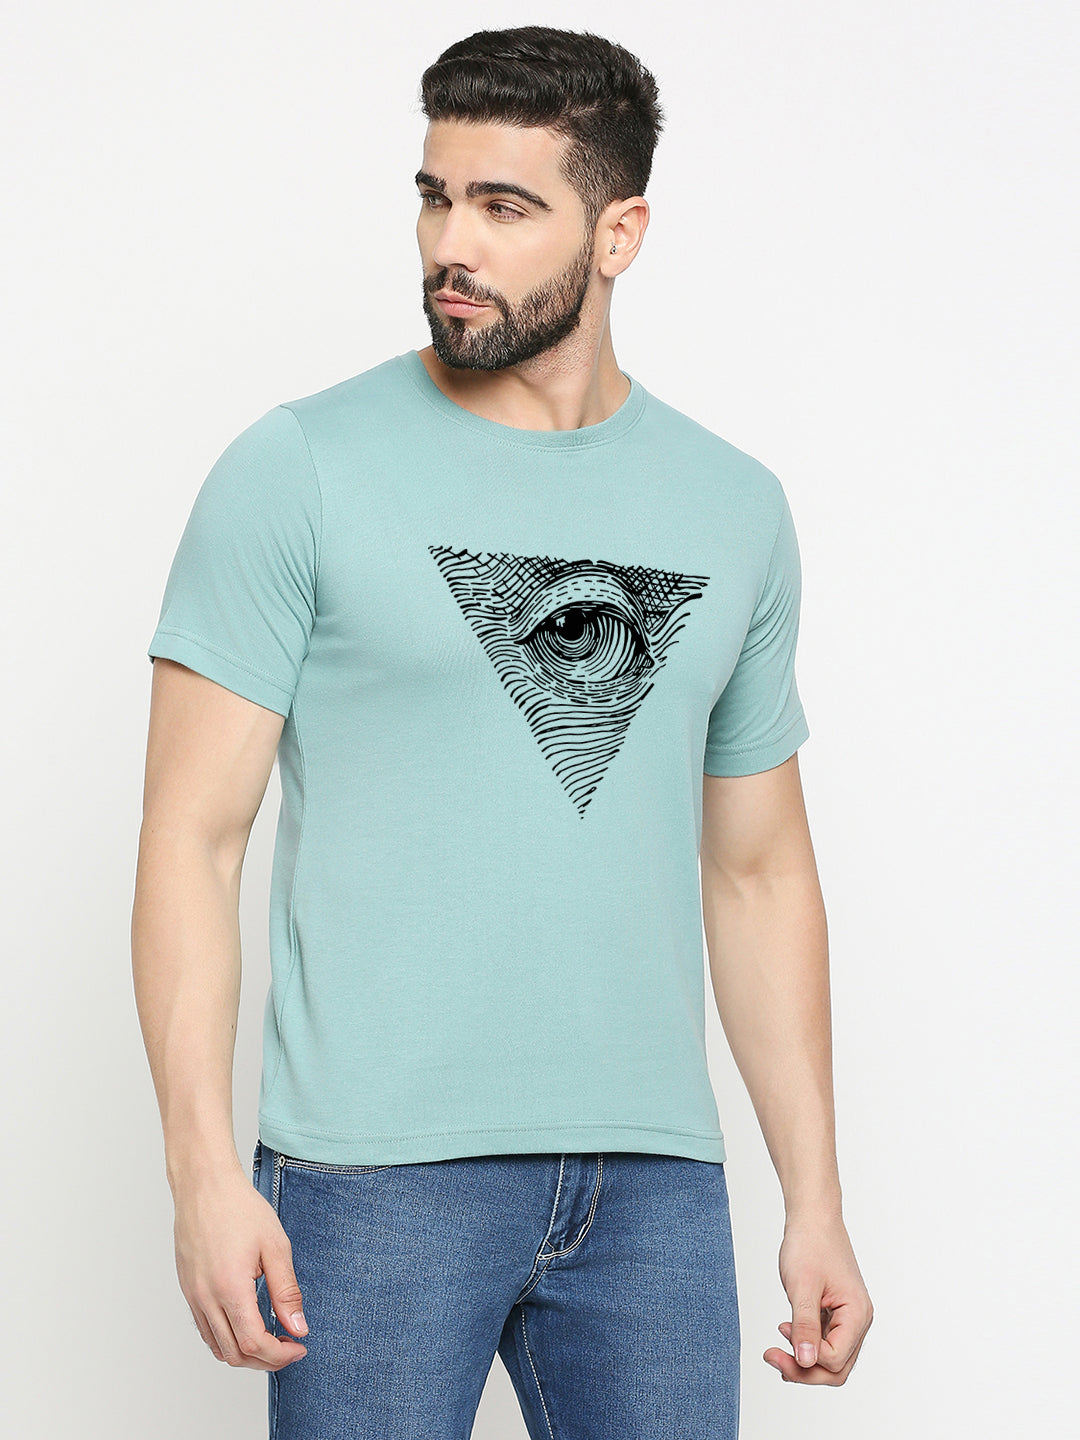 Triangle Eye T-Shirt